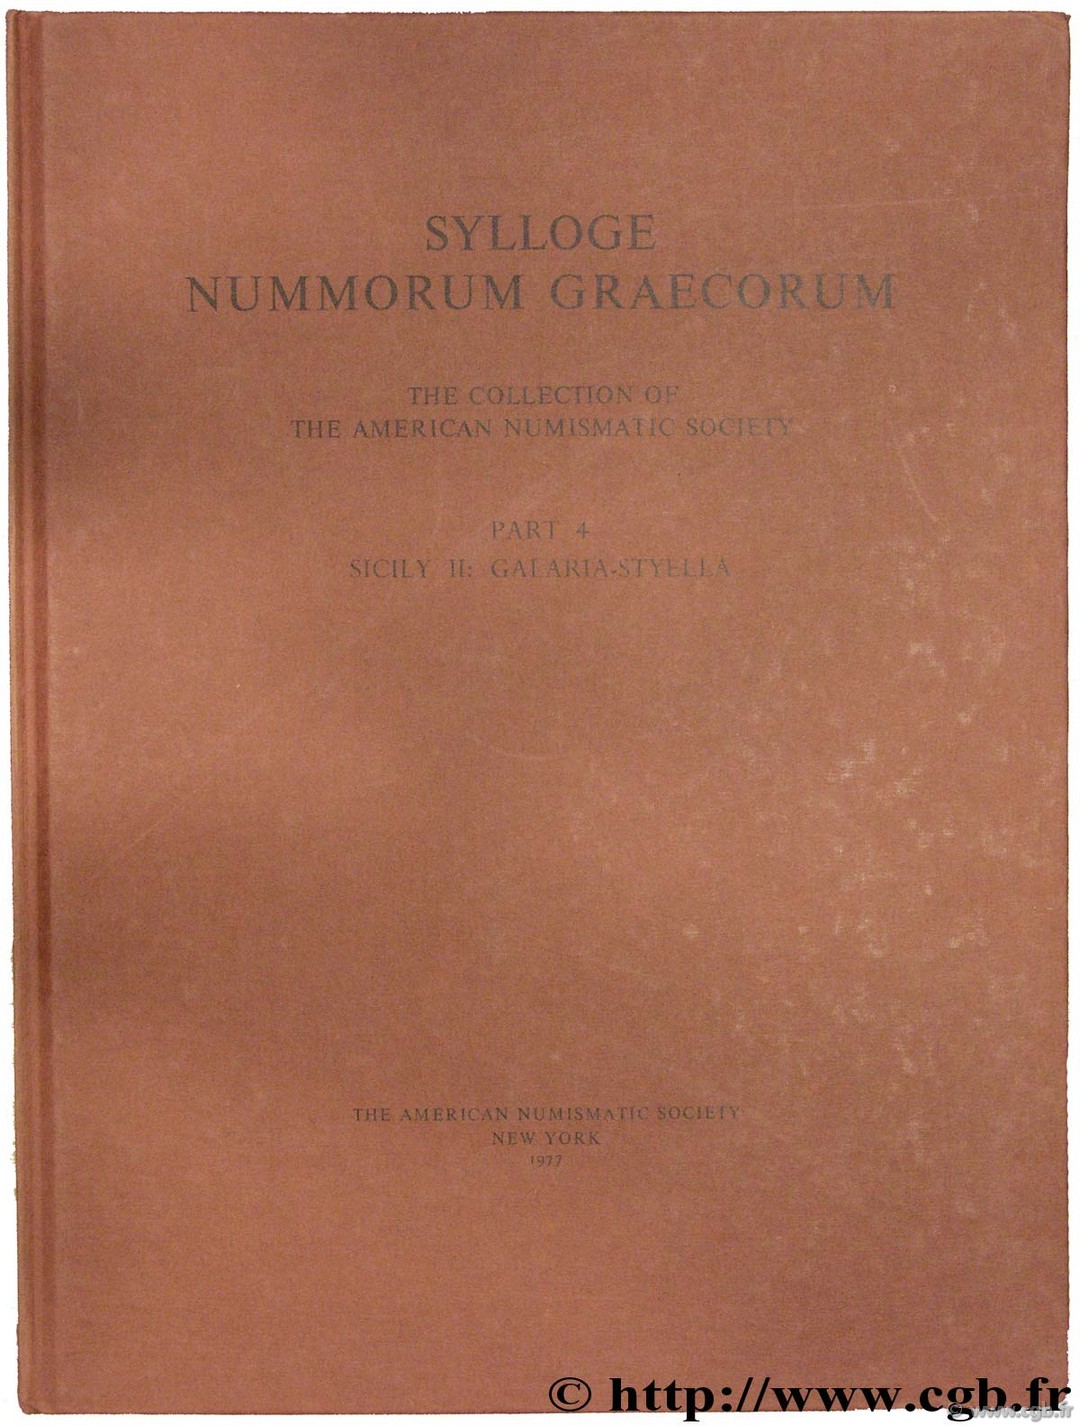 Sylloge Nummorum Graecorum (S.N.G.), The collection of the American Numismatic Society, part IV, Sicily II : Galaria - Styella 